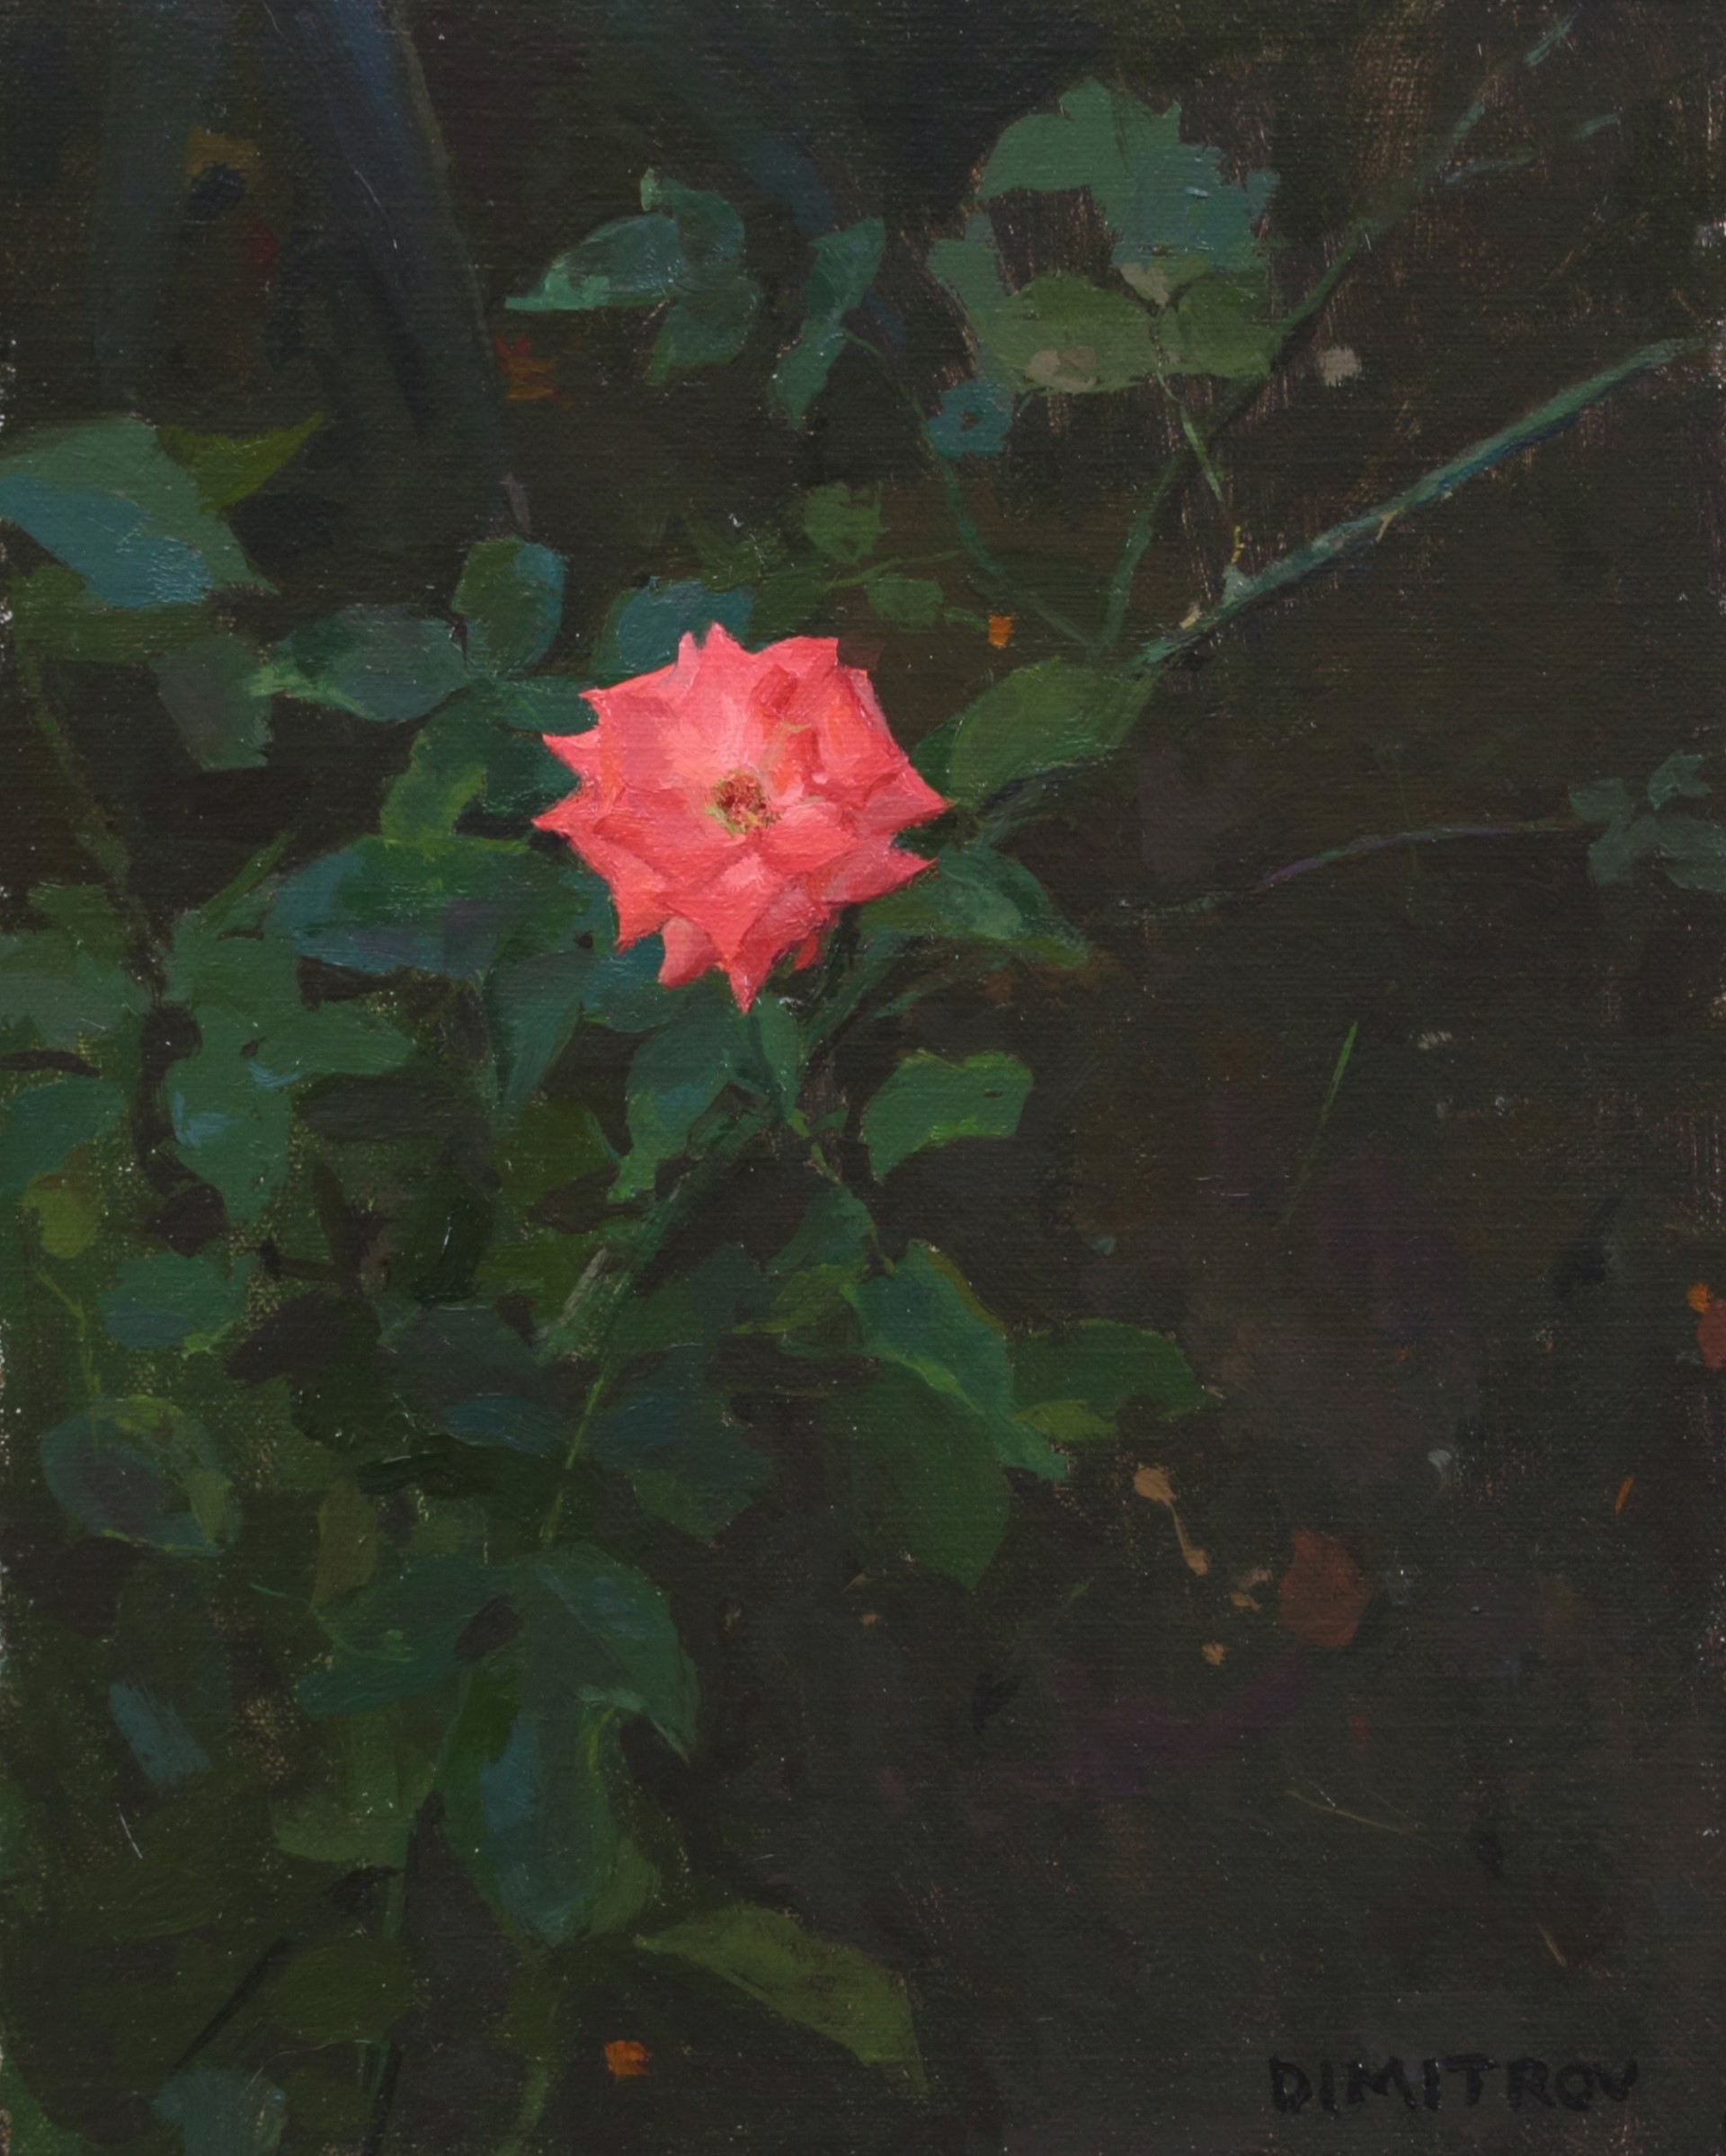 The Forgotten Rose by Martin Dimitrov